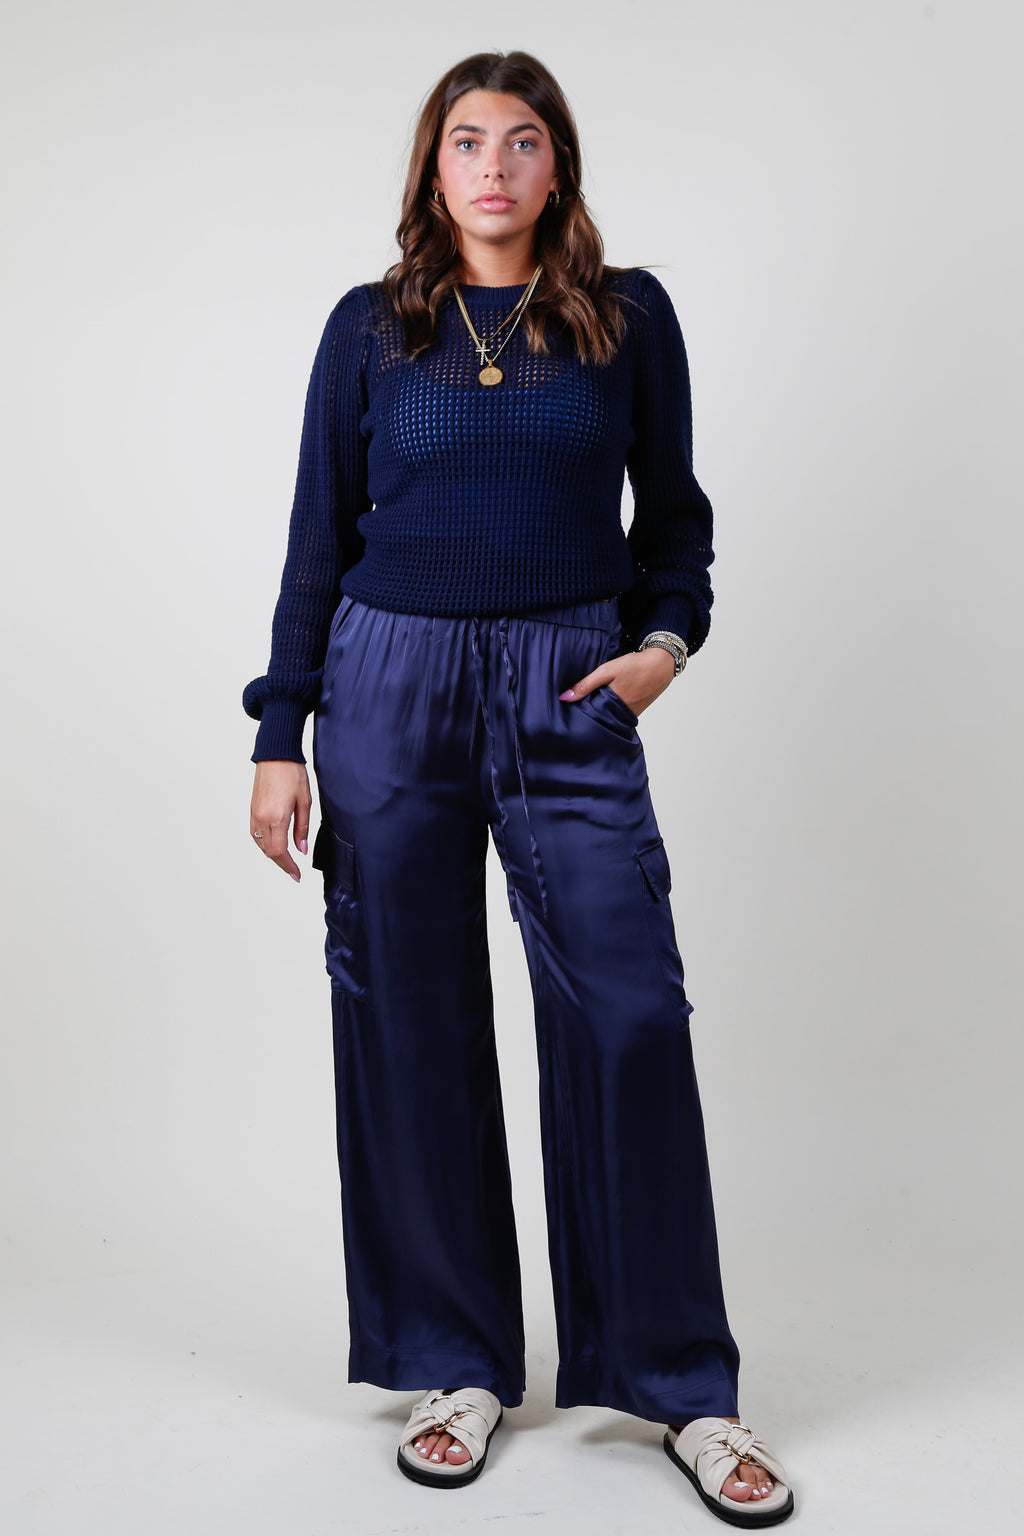 FRENCH | Yona Knitted Sweater - Bleu Marine